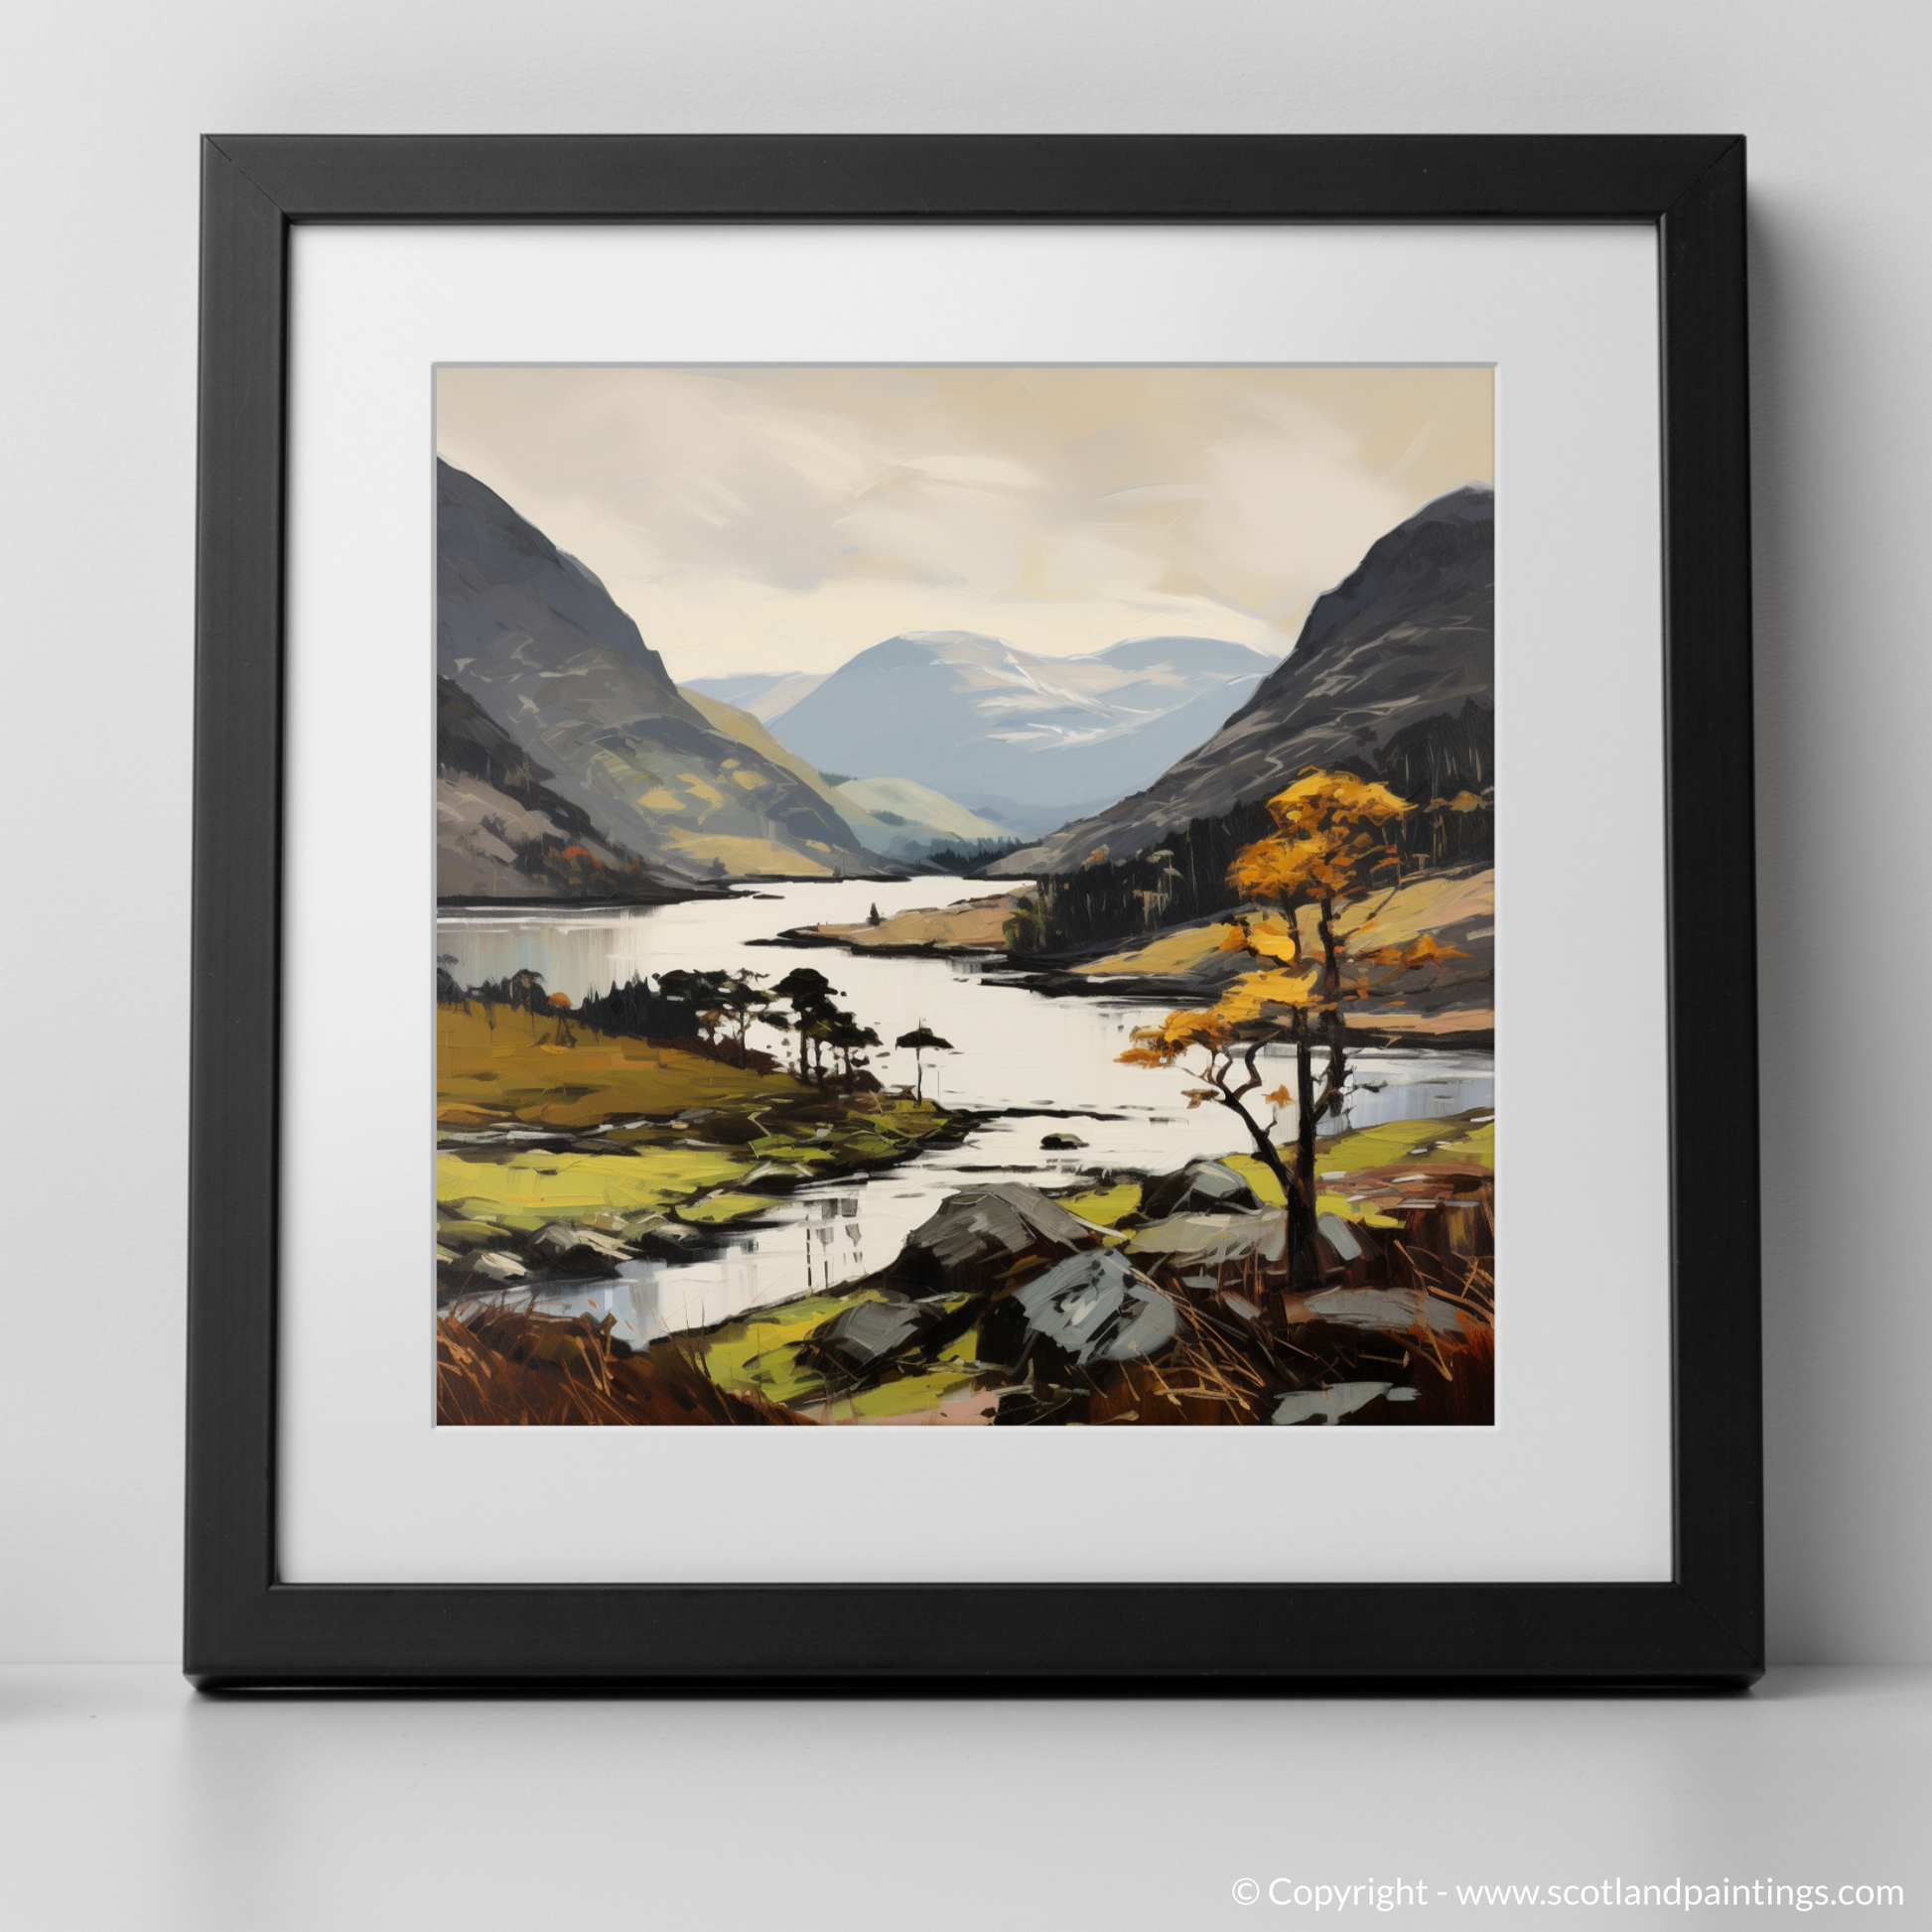 Art Print of Glenfinnan, Highlands with a black frame